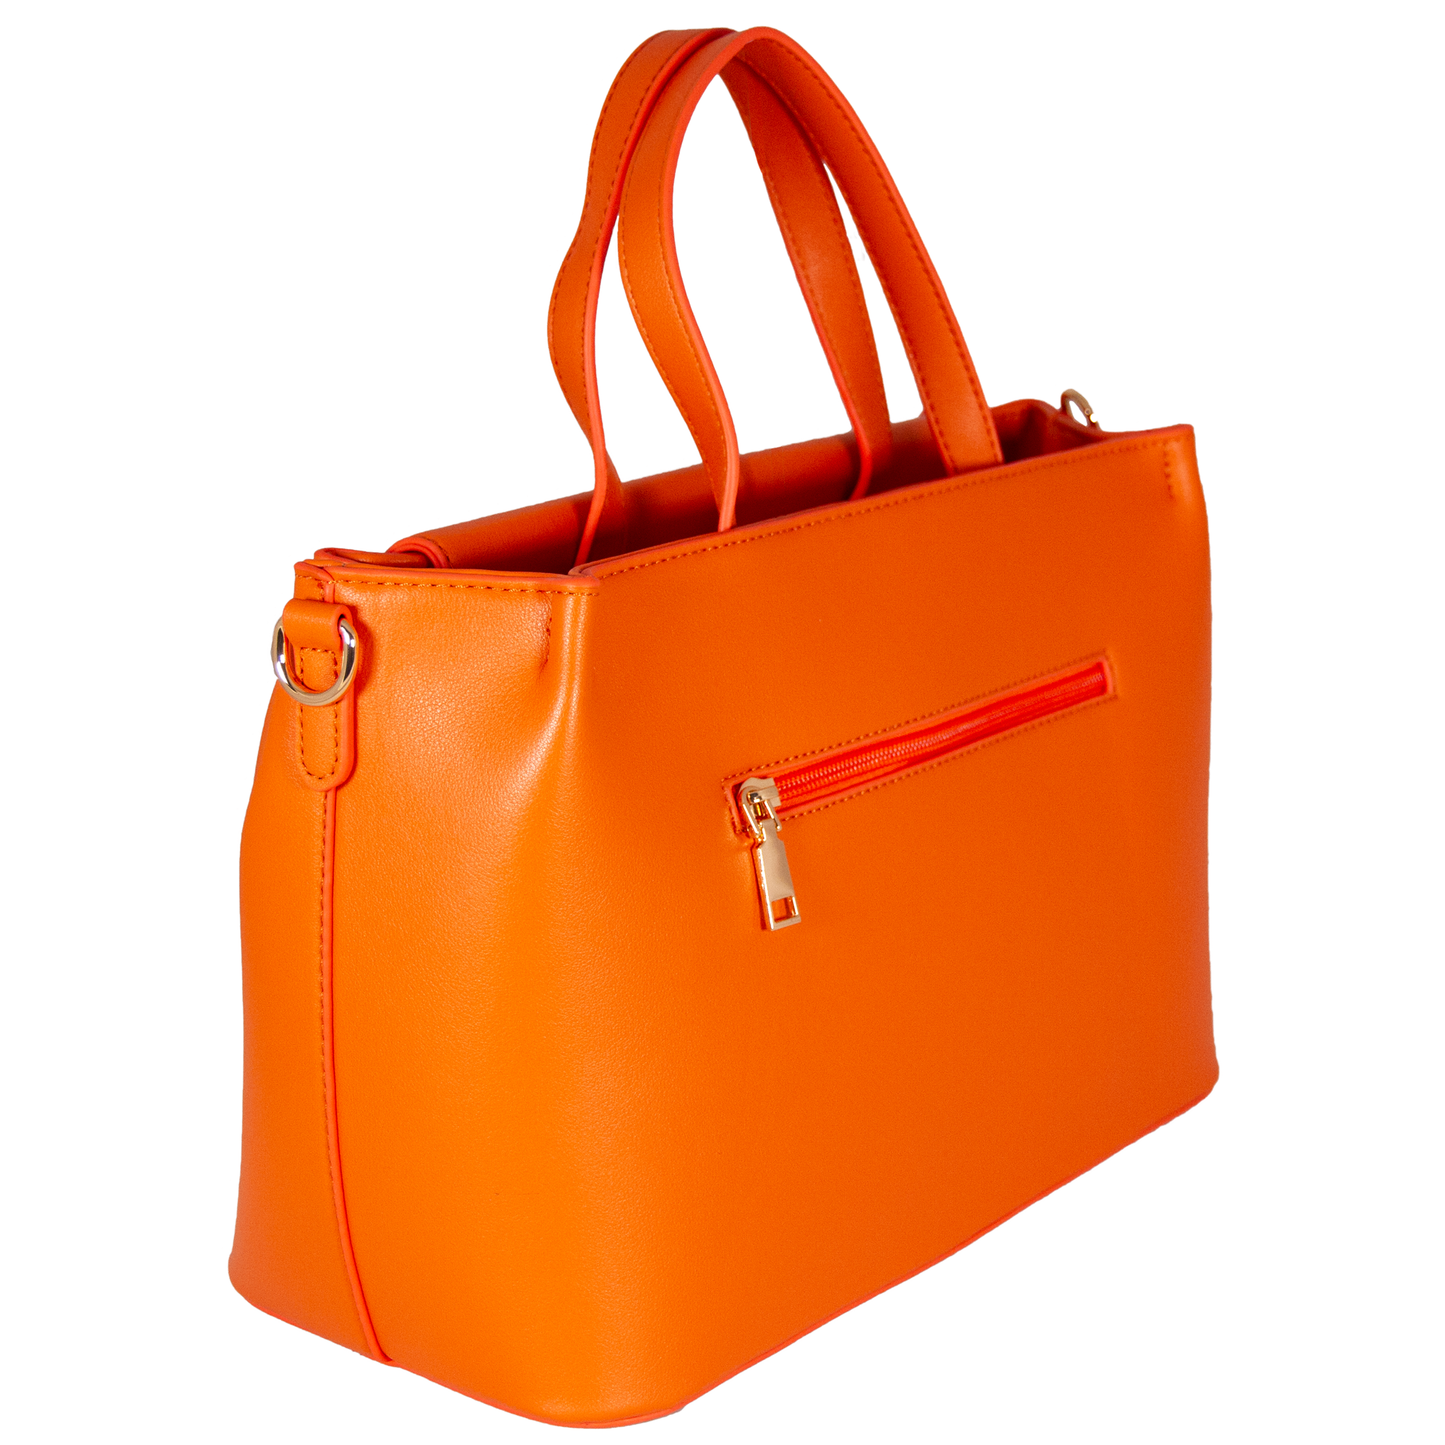 Z5B2 Women’s Charm Handbag - Orange